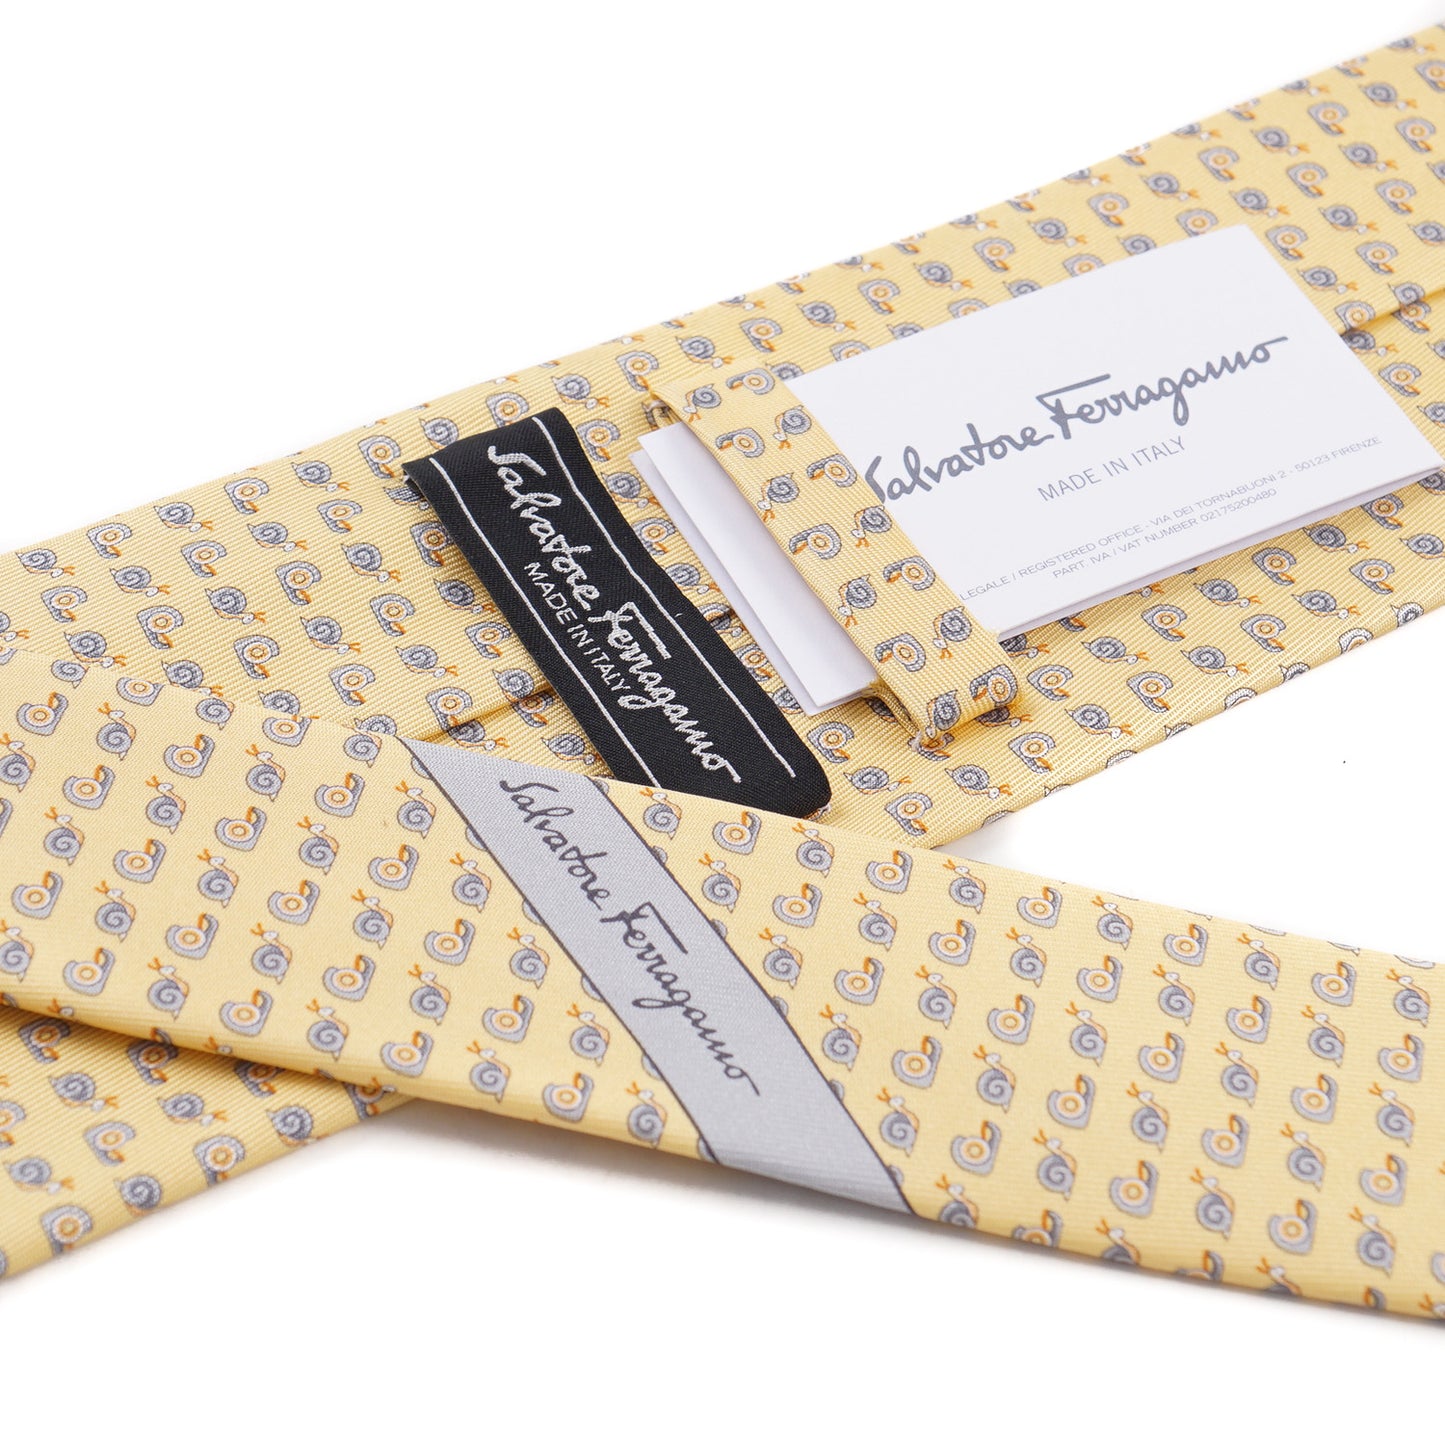 Salvatore Ferragamo Snail Print Tie - Top Shelf Apparel